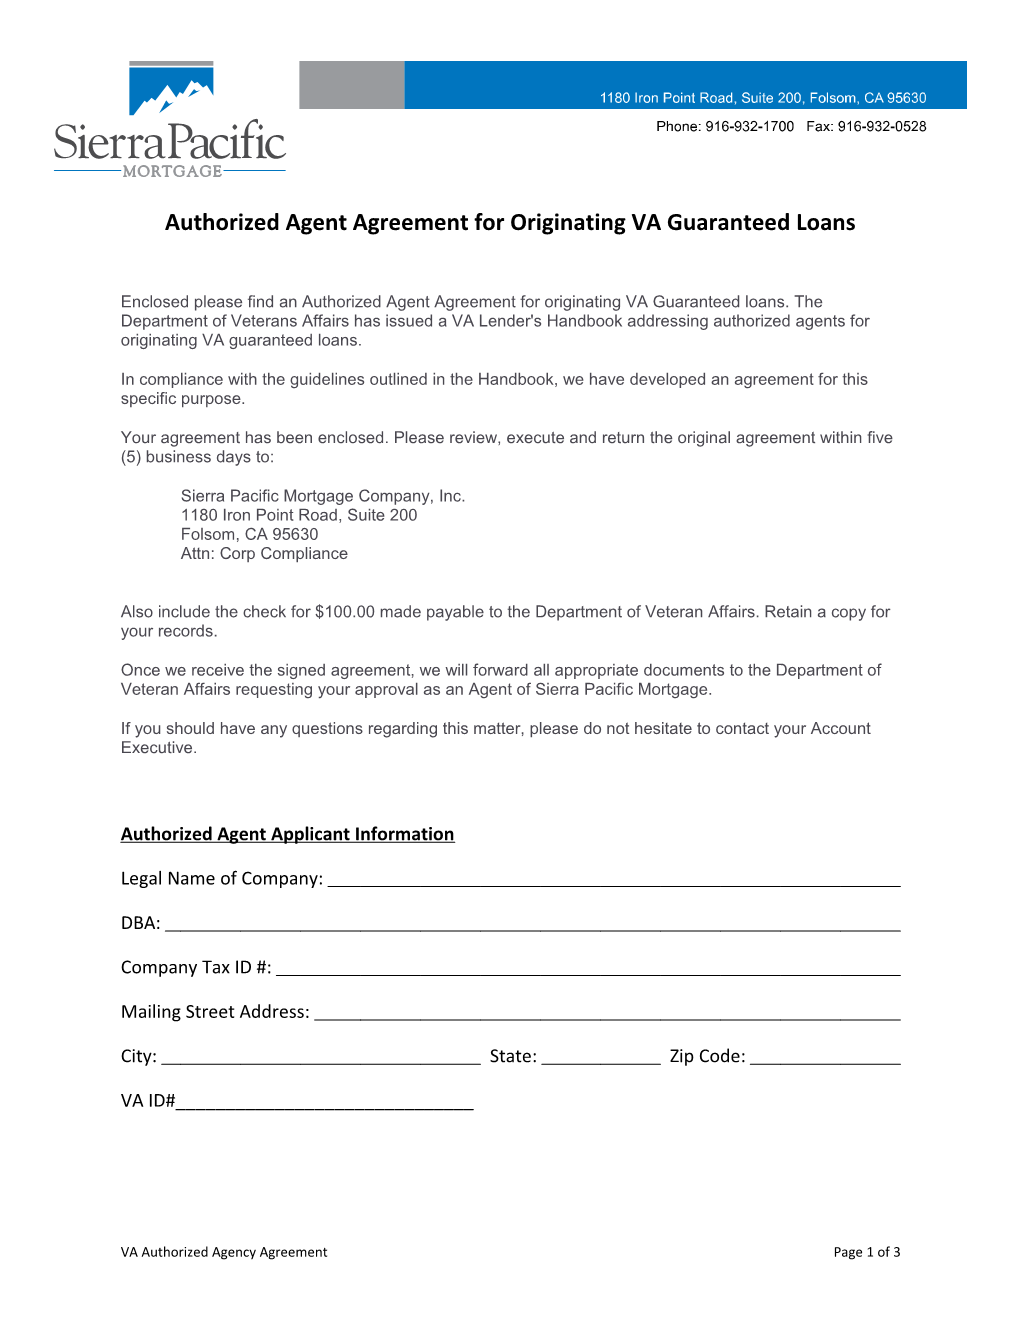 Authorized Agent Agreement for Originating VA Guaranteed Loans